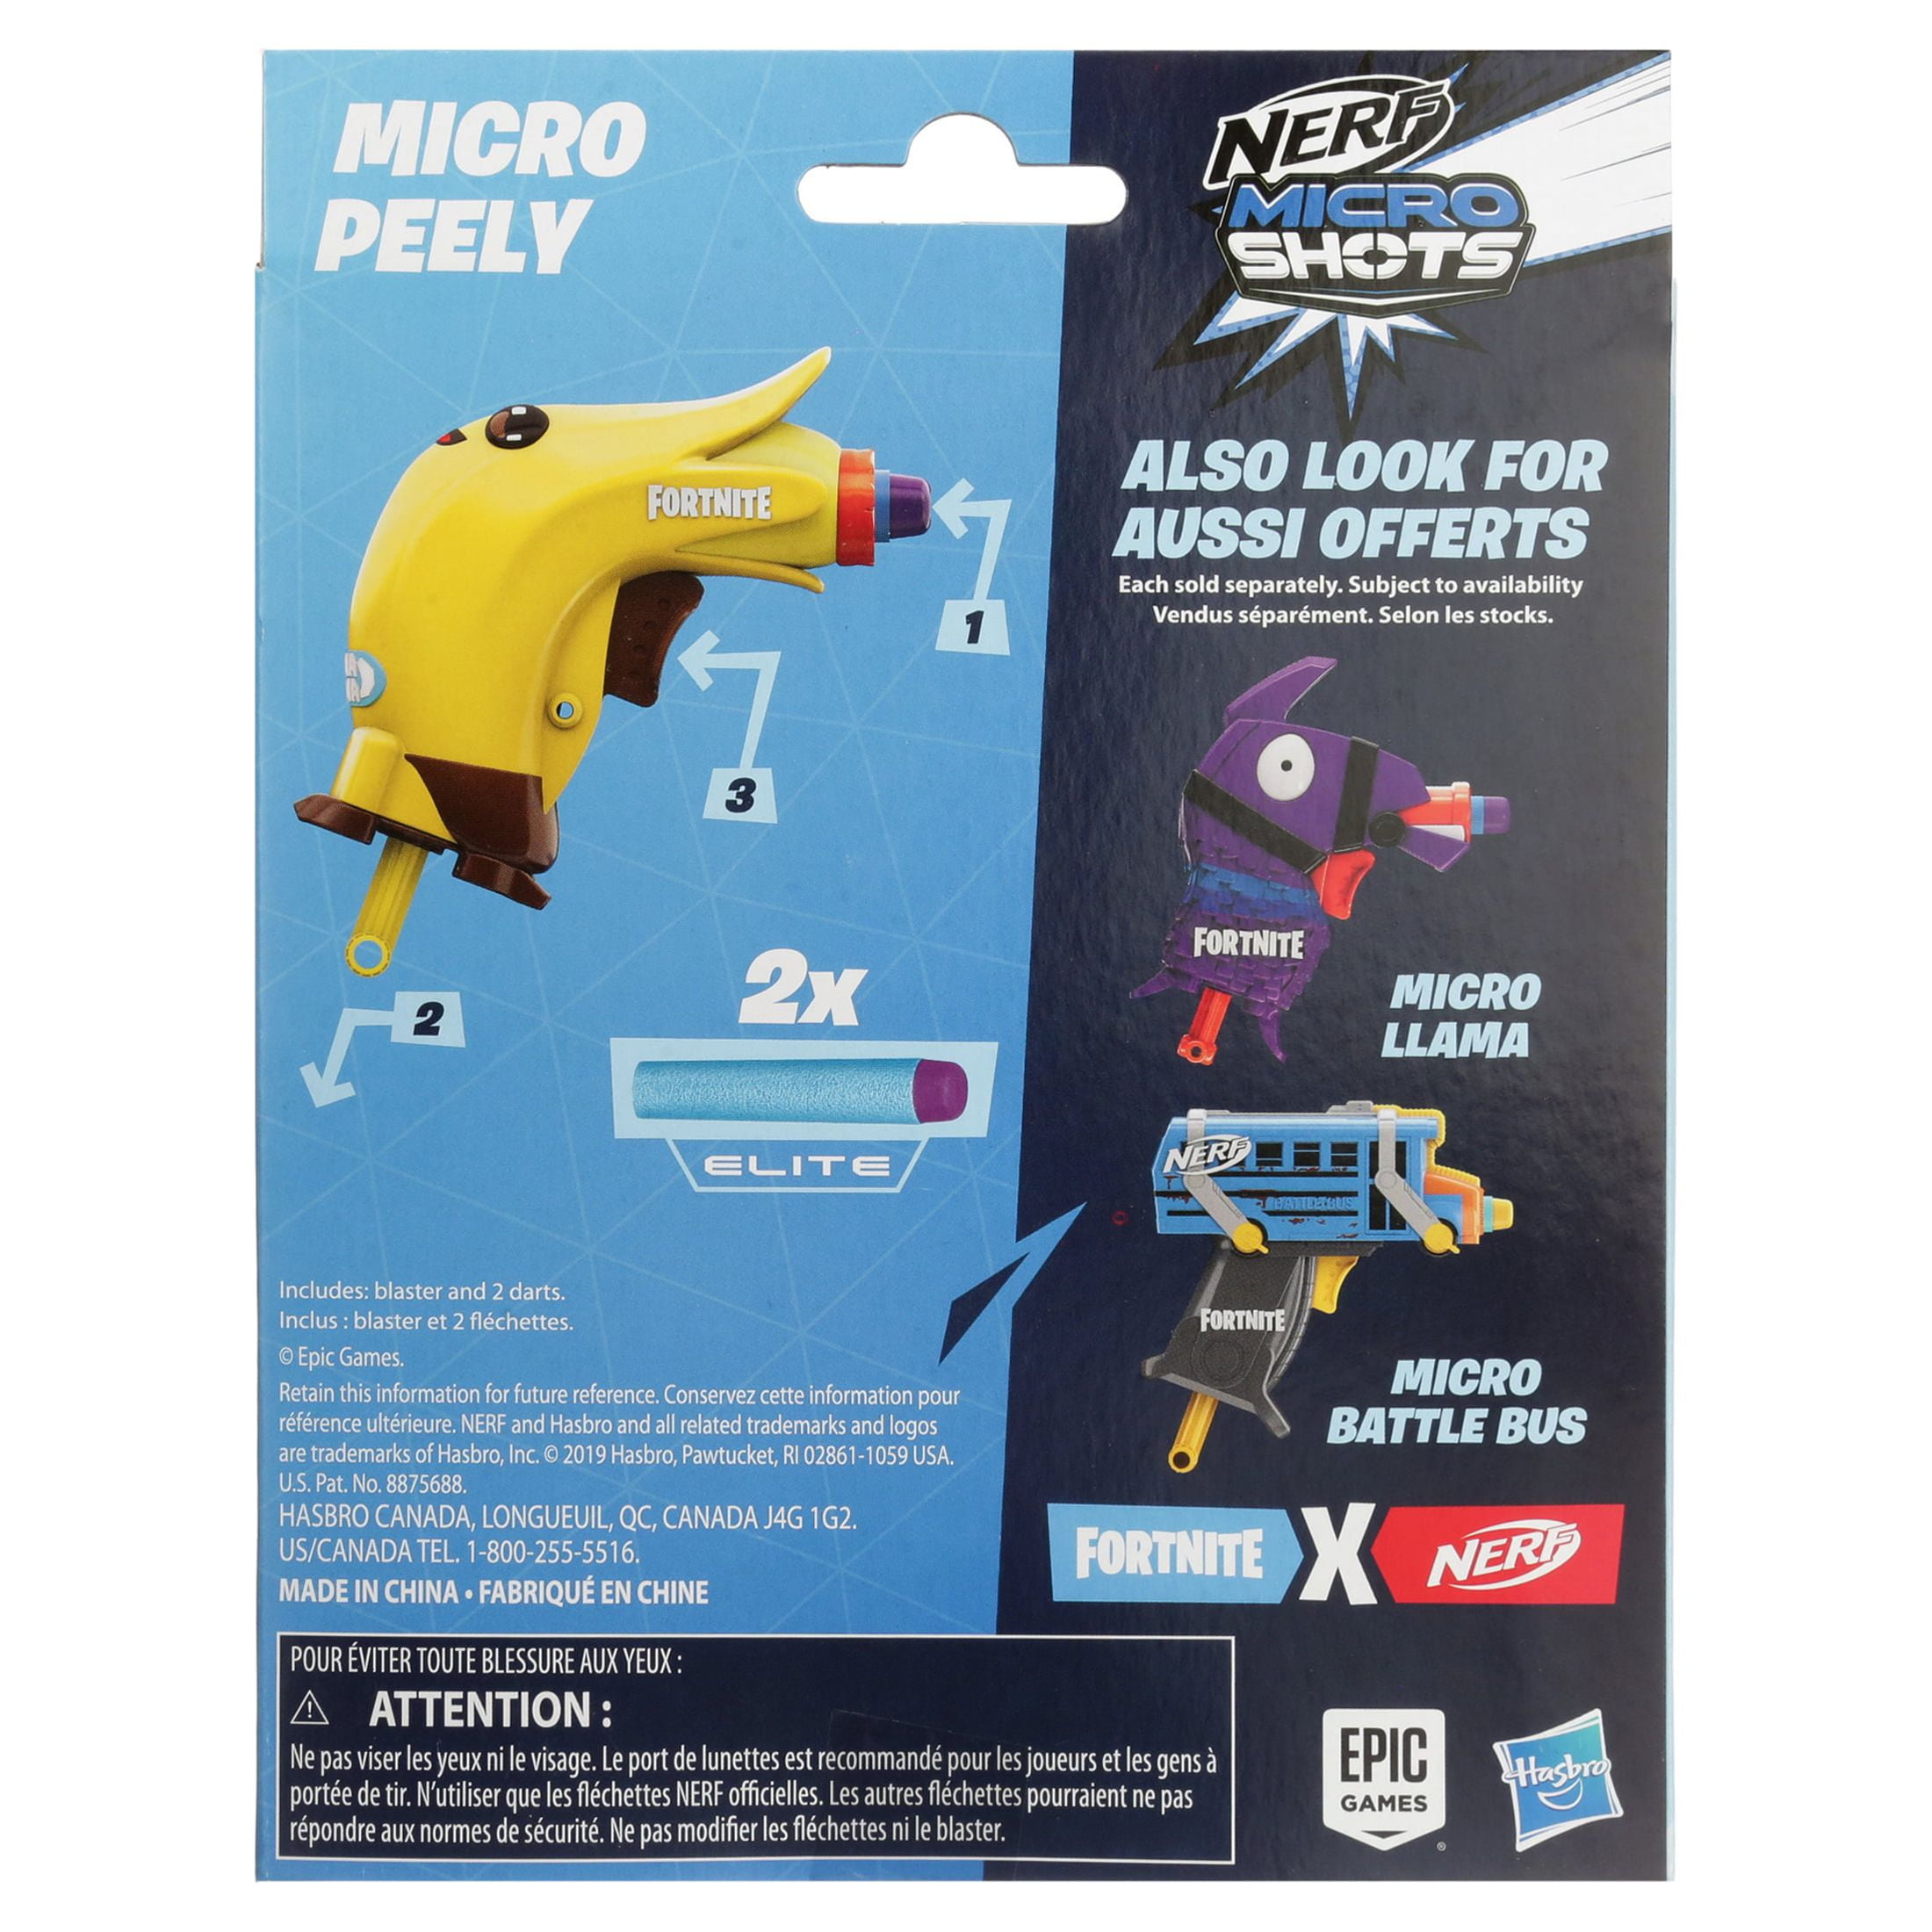 Nerf Fortnite MicroShots Micro Grappler Mini Dart-Firing Blaster